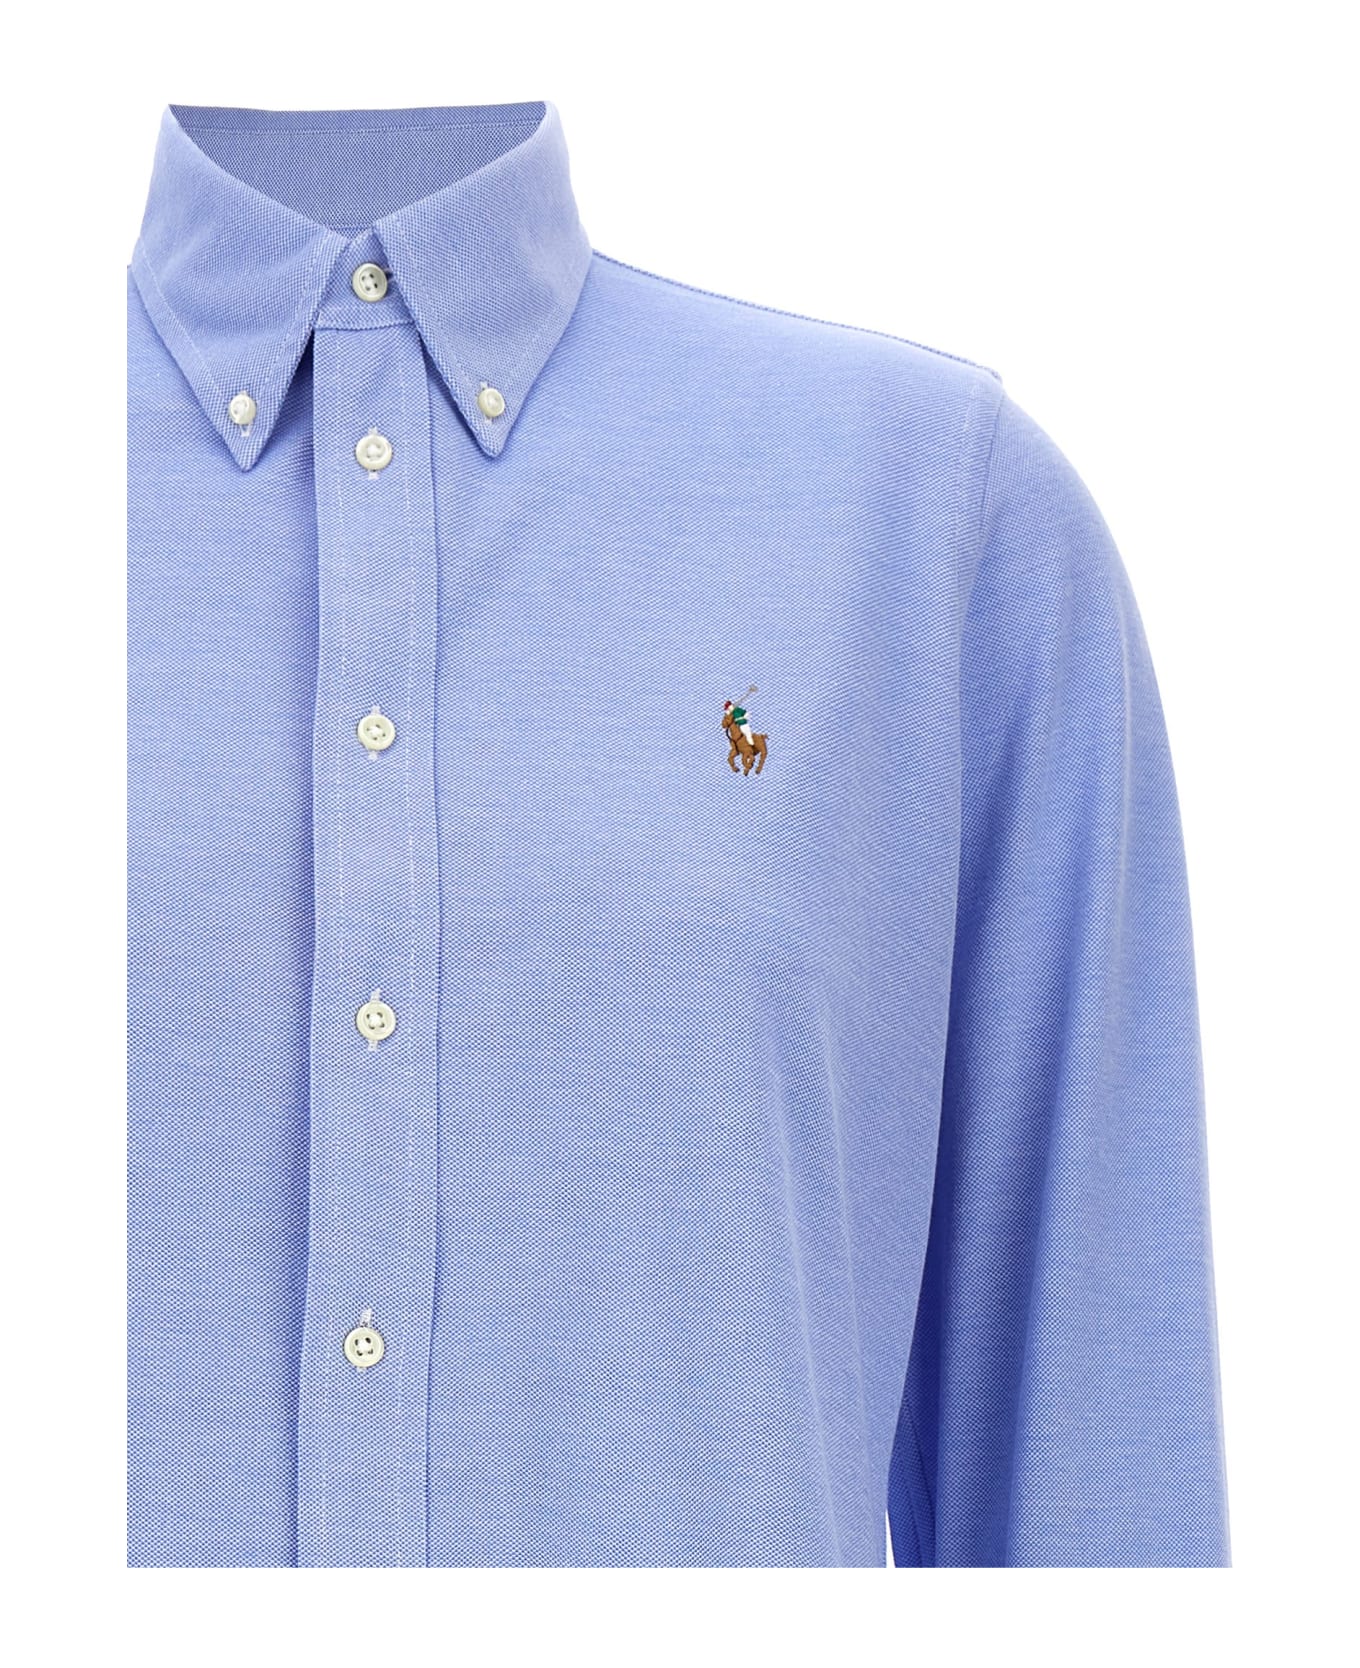 Ralph Lauren 'heidi' Shirt - Harbour Island Blue シャツ